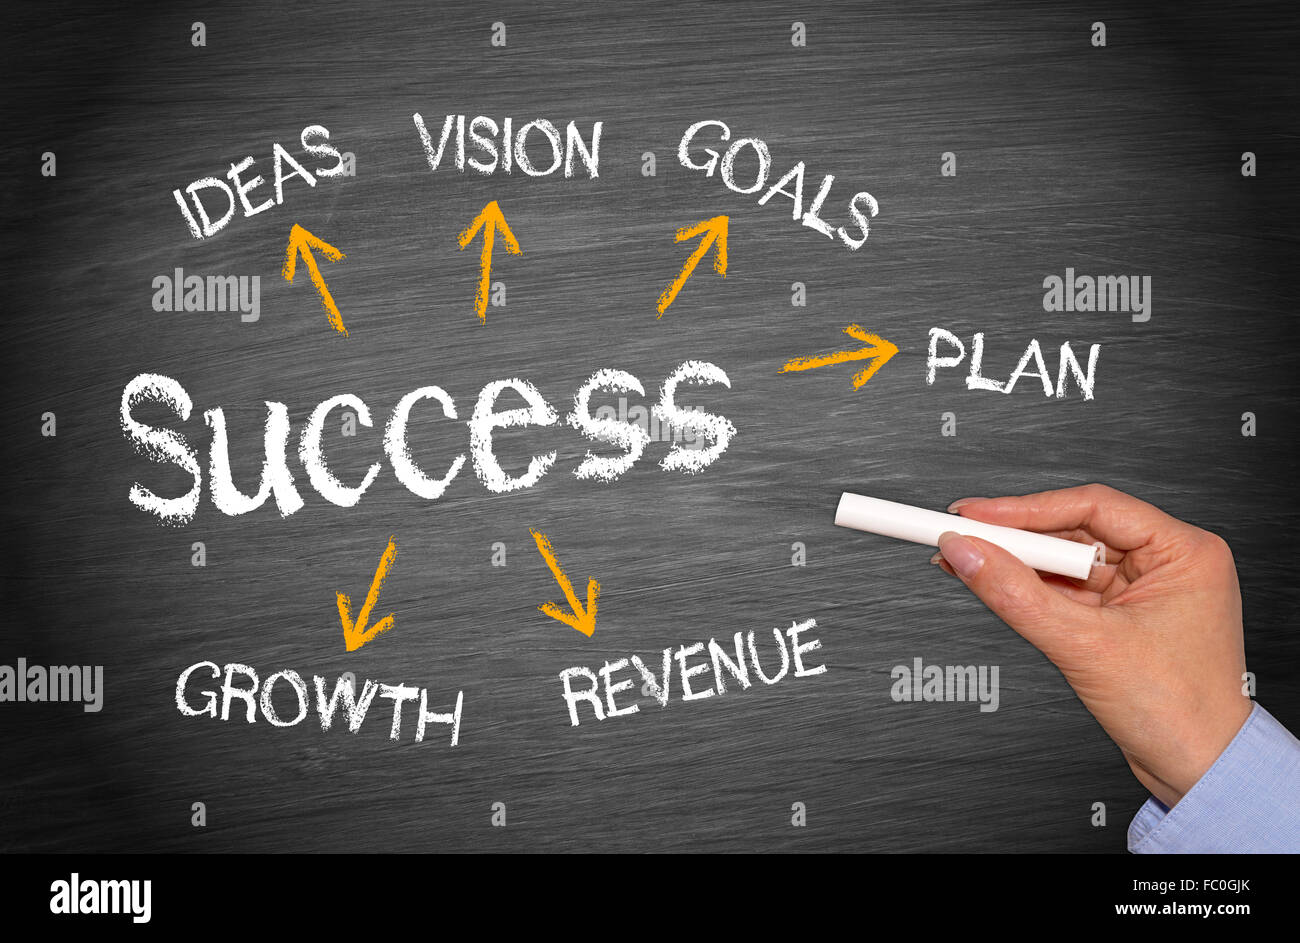 Success - Business Concept Stock Photo